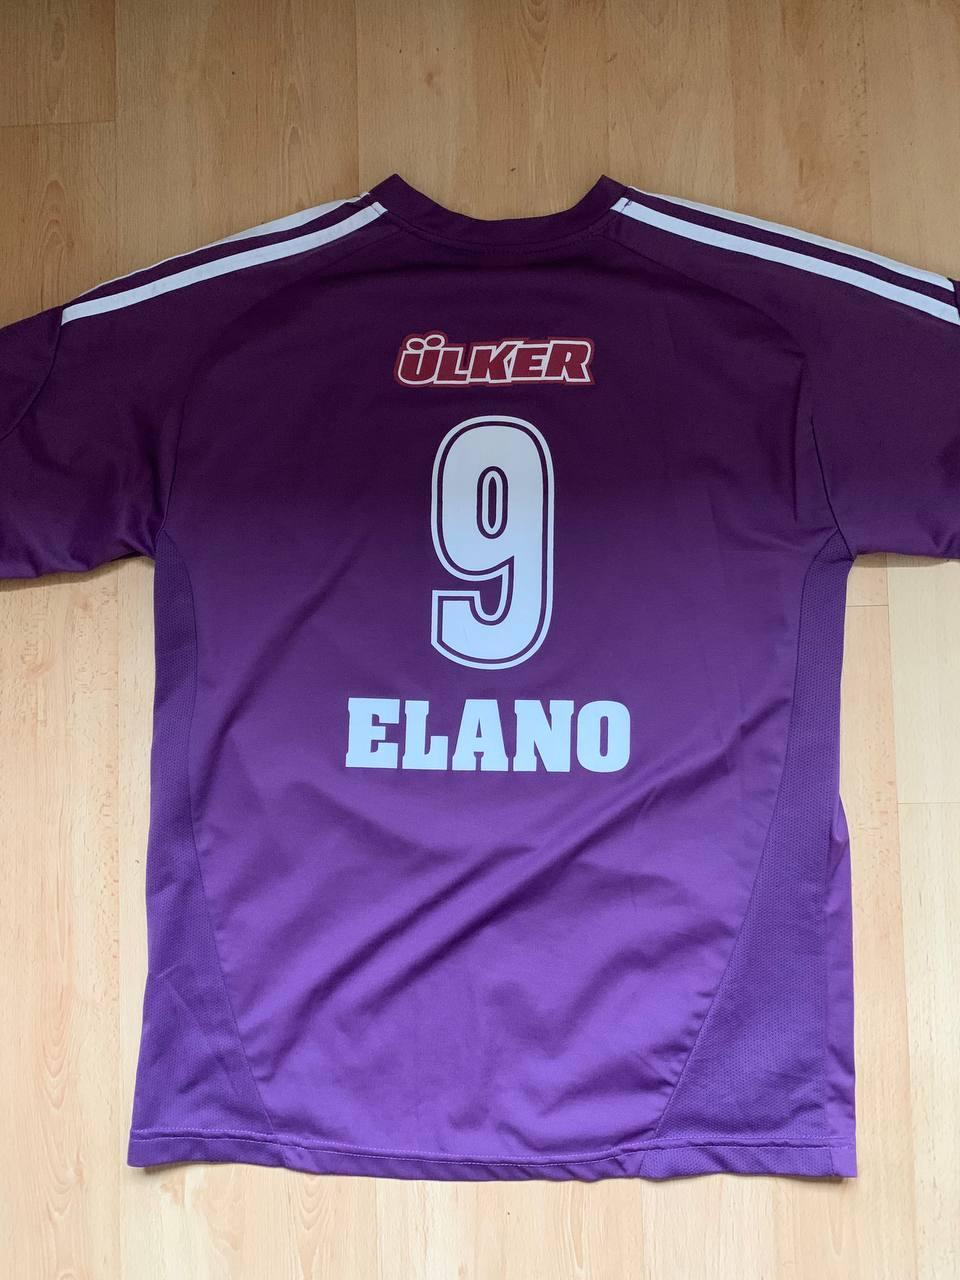 Игровая футболка Галатасарая сезона-2009/10. Элано Блумер 1